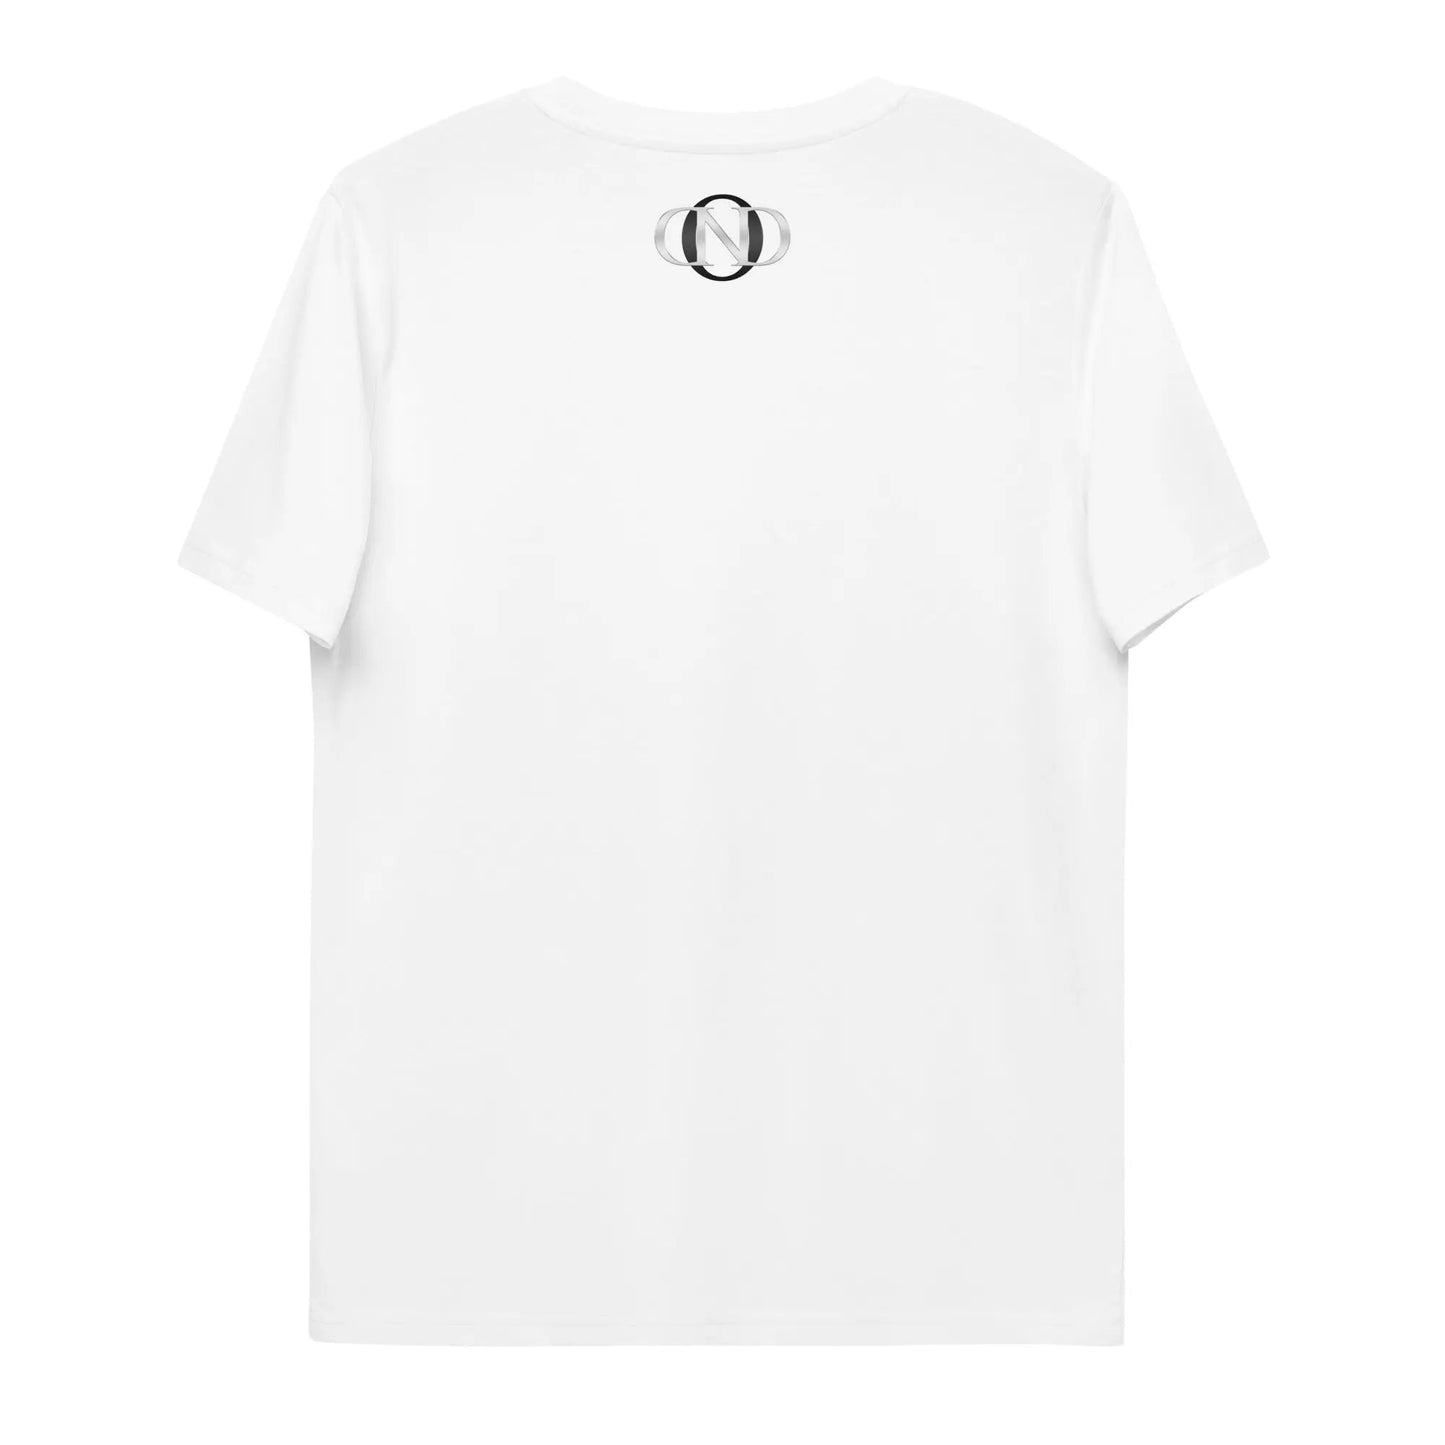 24 Neduz Designs Unisex Socialliberalerna T-Shirt - 100%